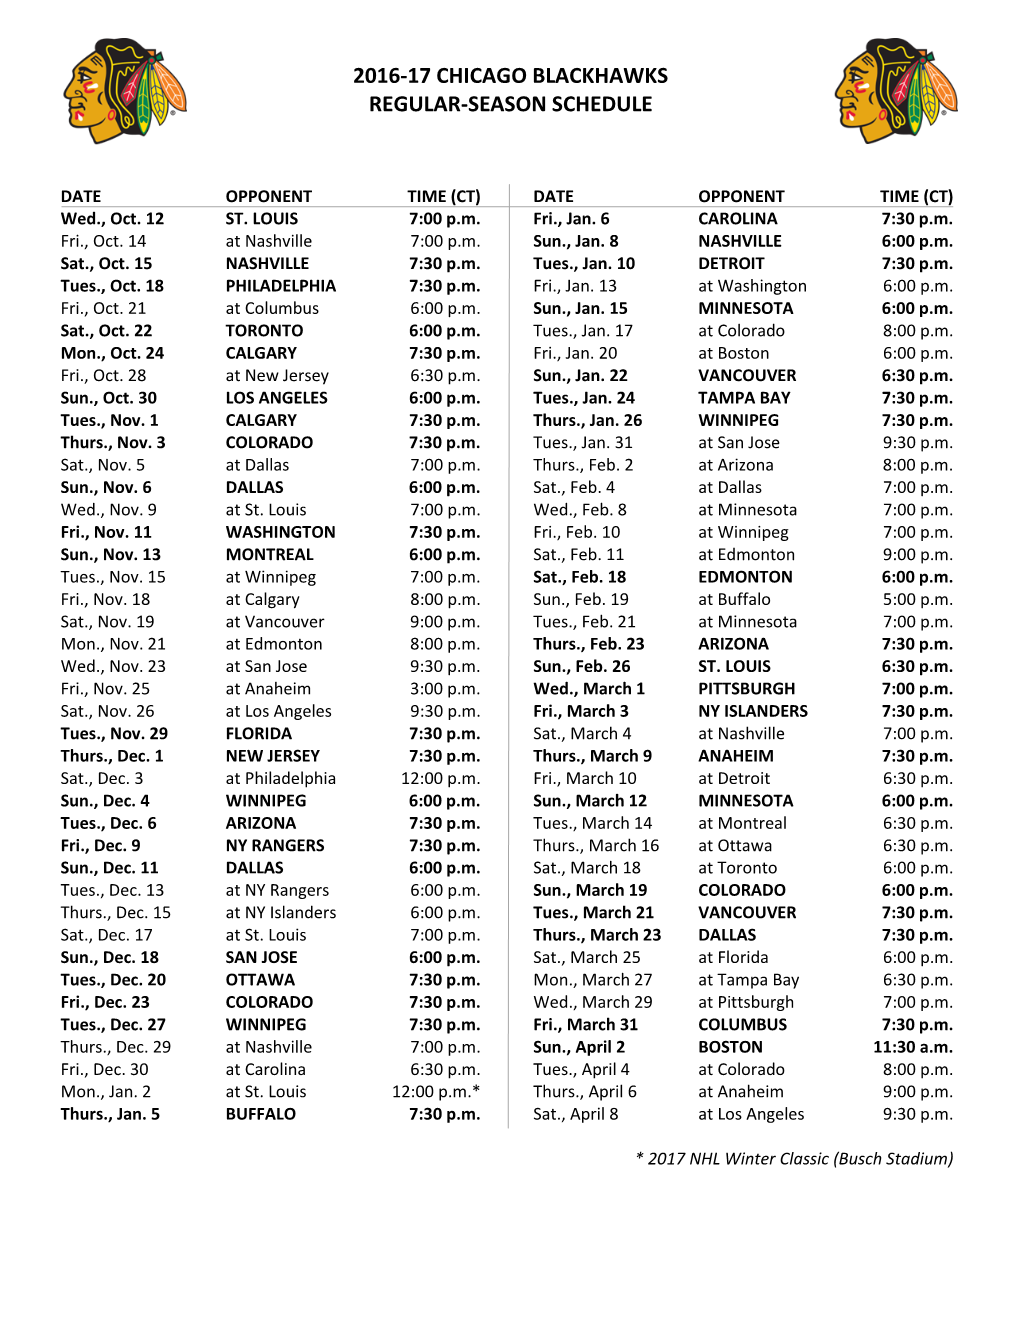 2016-17 Chicago Blackhawks Regular-Season Schedule